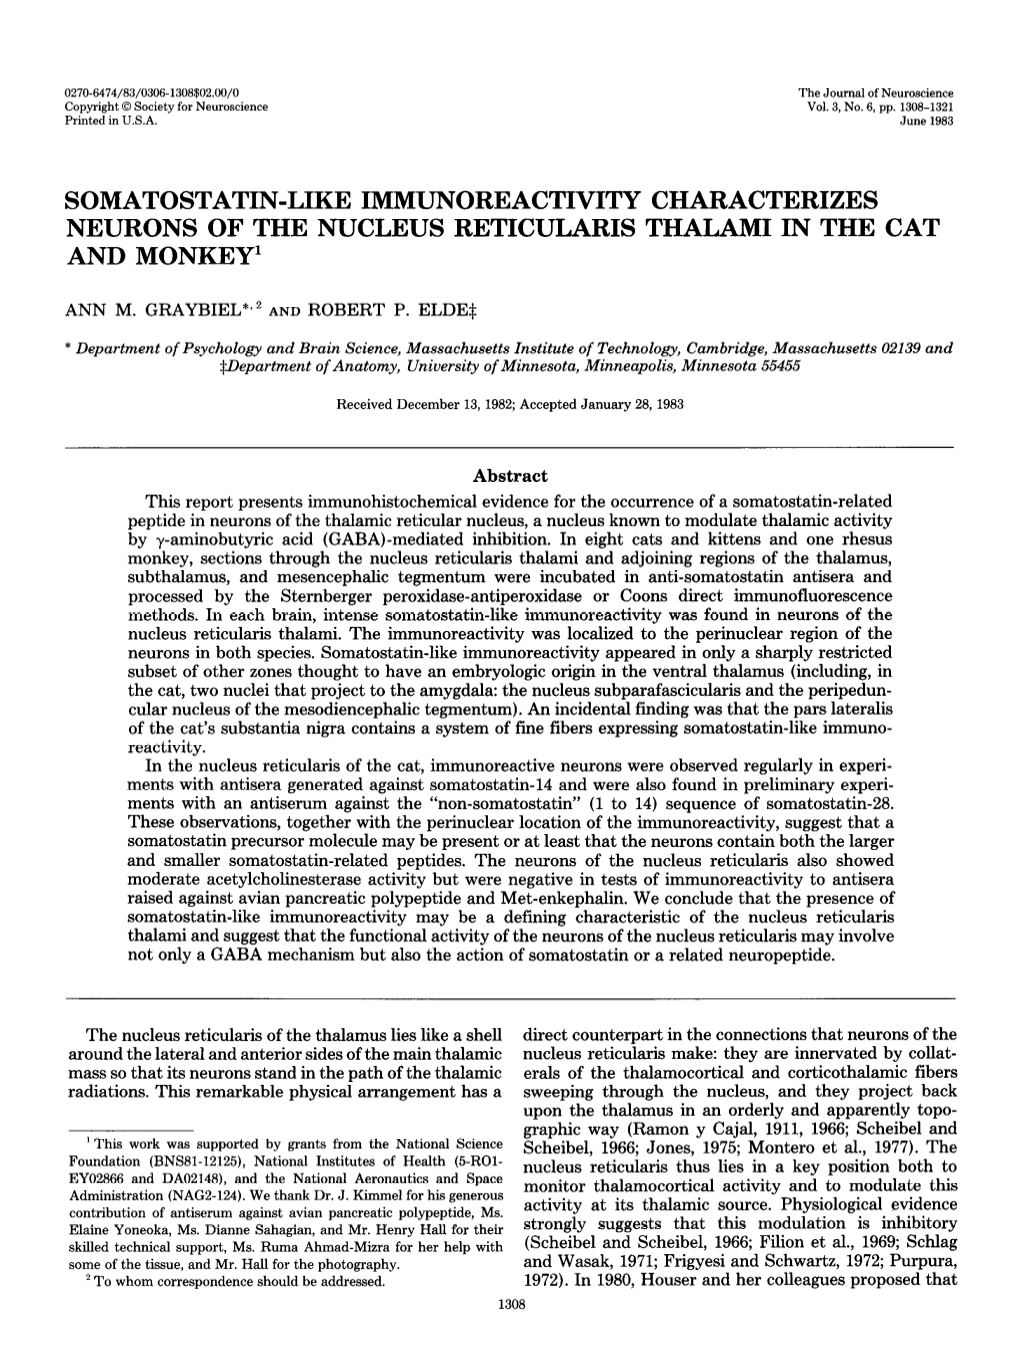 Somatostatin-Like Immunoreactivity Characterizes Neurons of the Nucleus Reticularis Thalami in the Cat and Monkey1